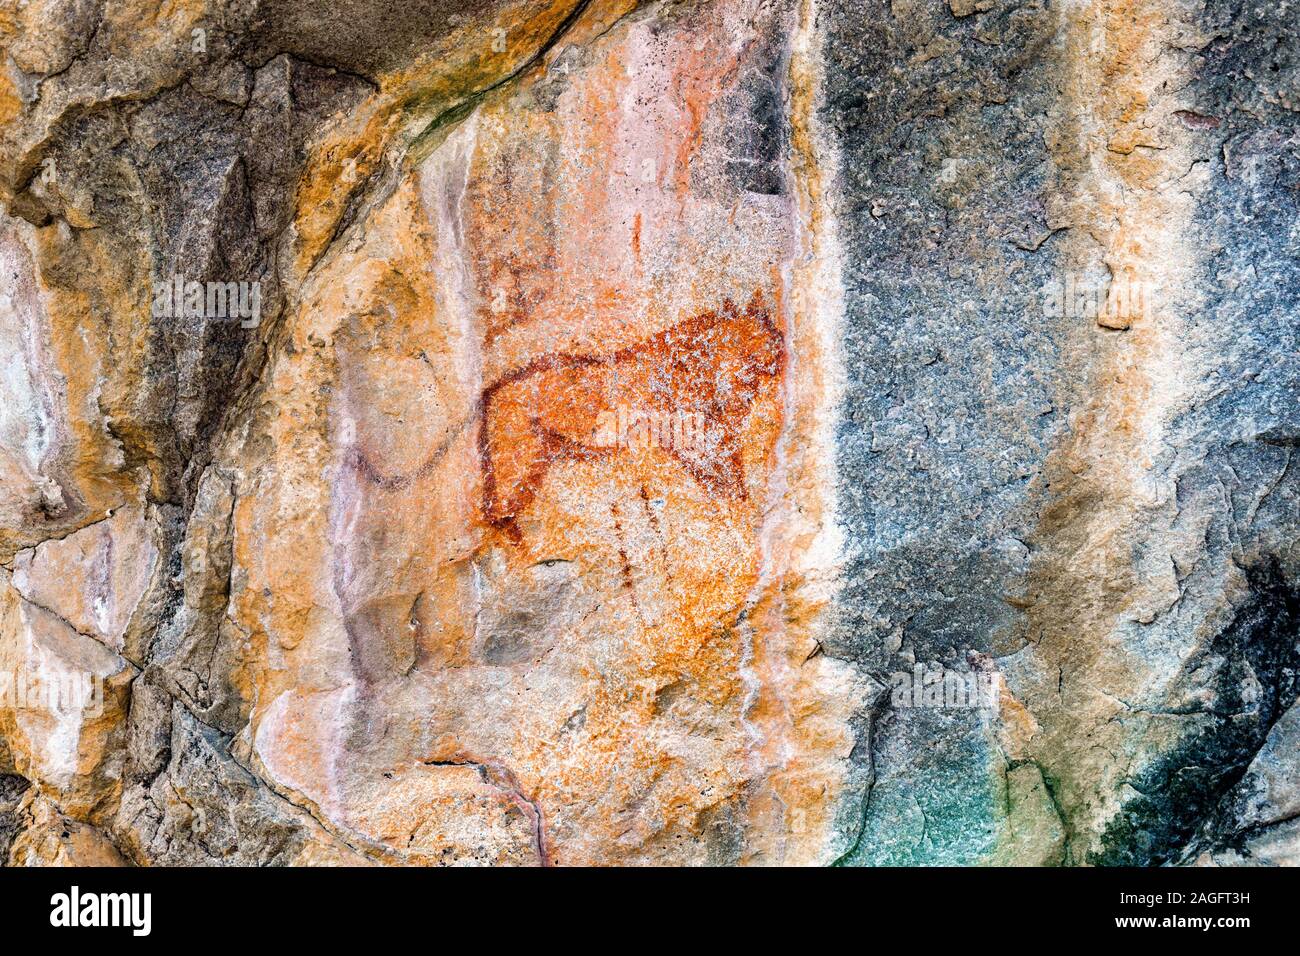 Tsodilo hills, rock paintings of lion, Louvre of desert, isolated hills in kalahari desert, Botswana, Southern Africa, Africa Stock Photo